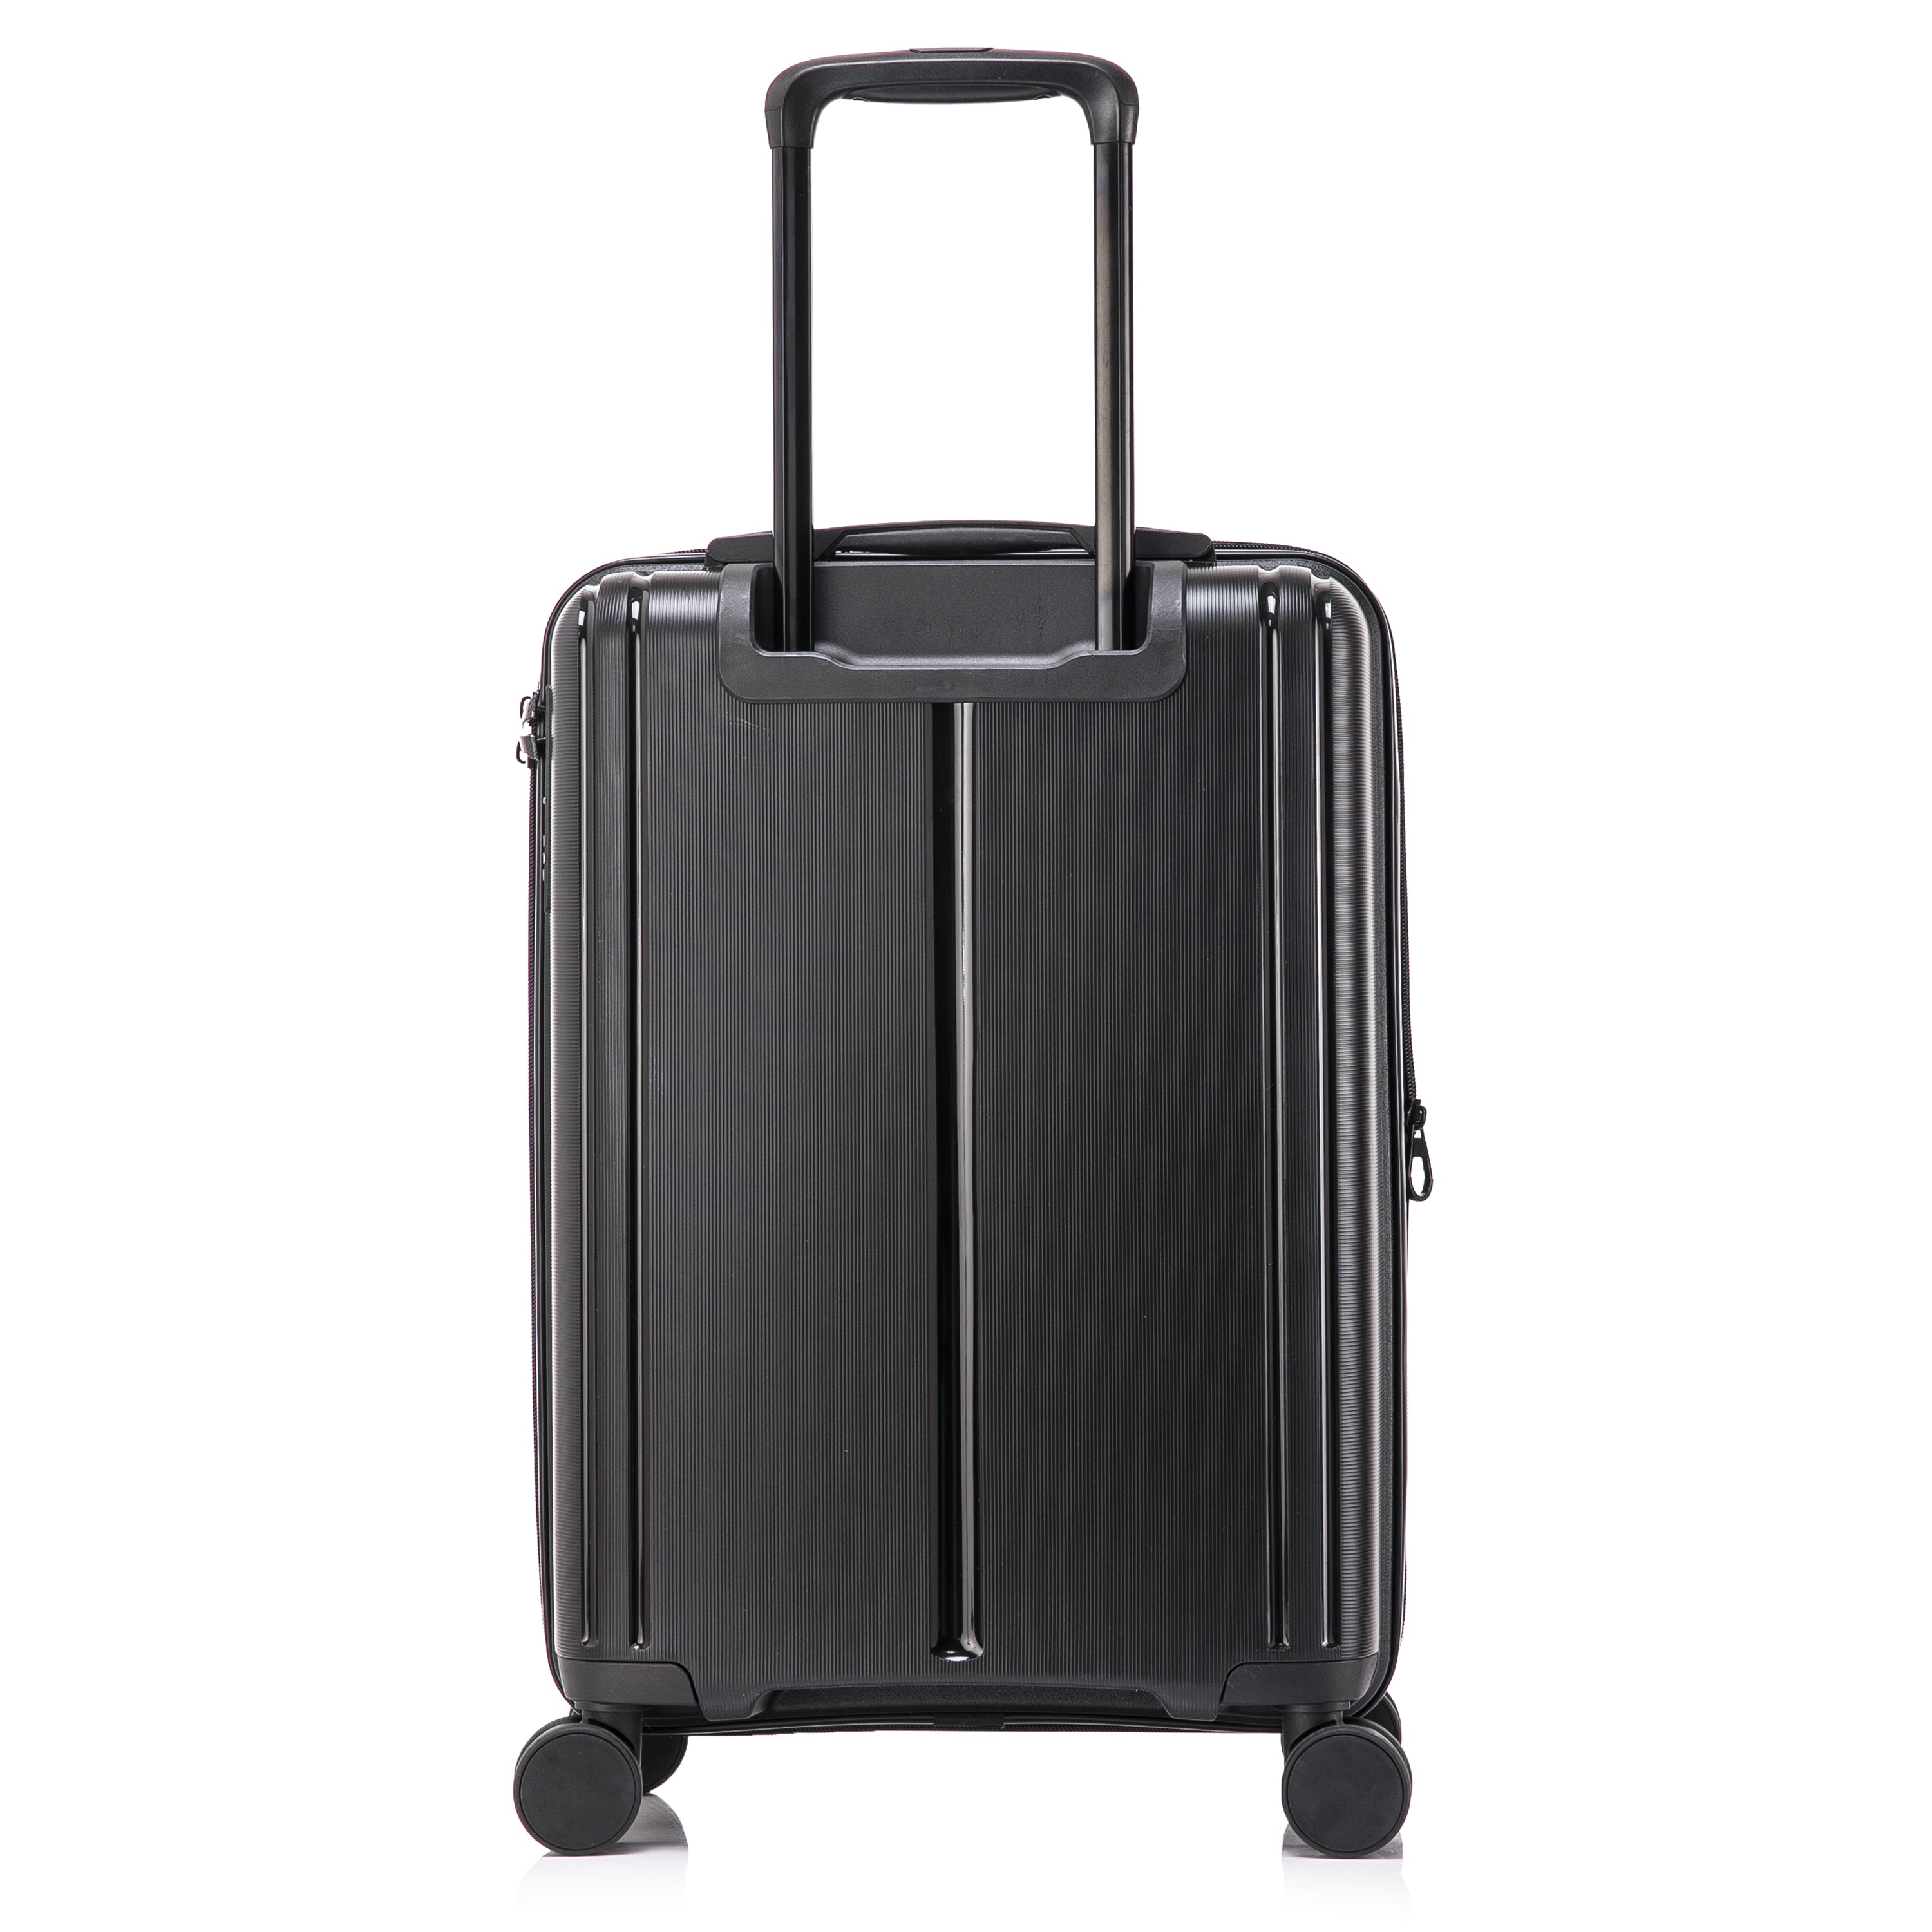 DUKAP Airley Lightweight Hardside Spinner Luggage 20" Carry-On Black